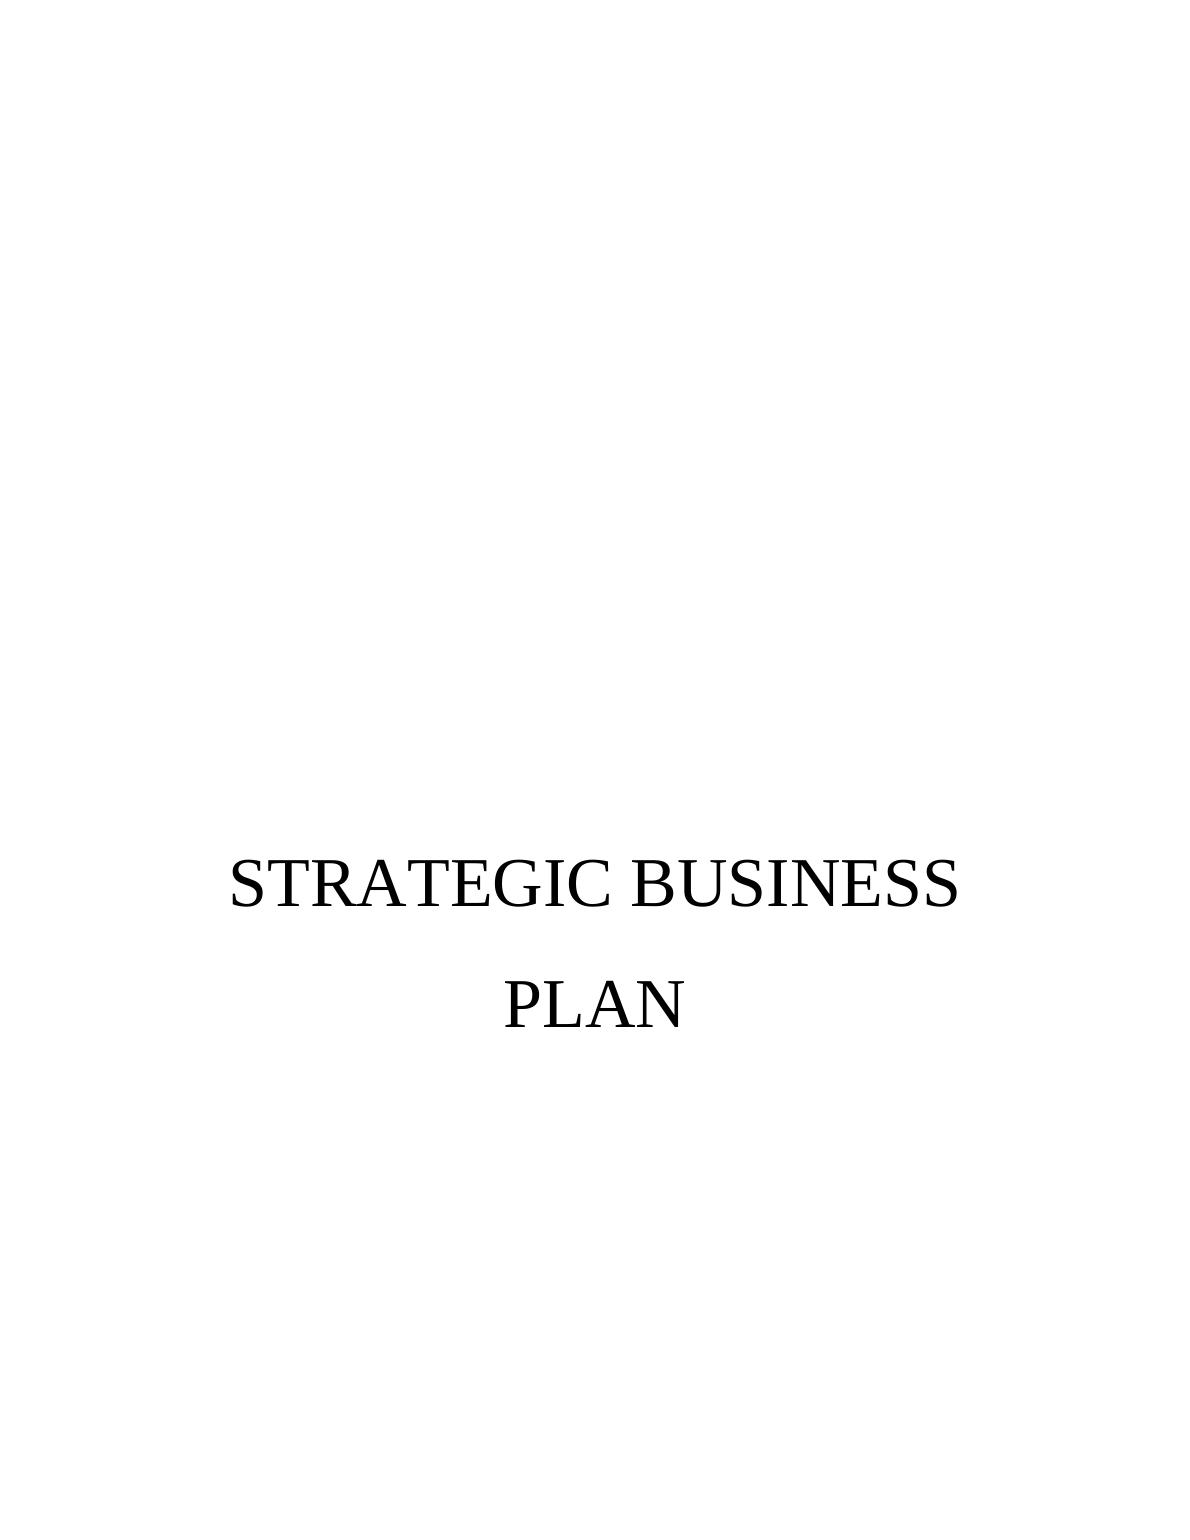 Strategic Business Plan for a Team 3 Hotel in Australia_1